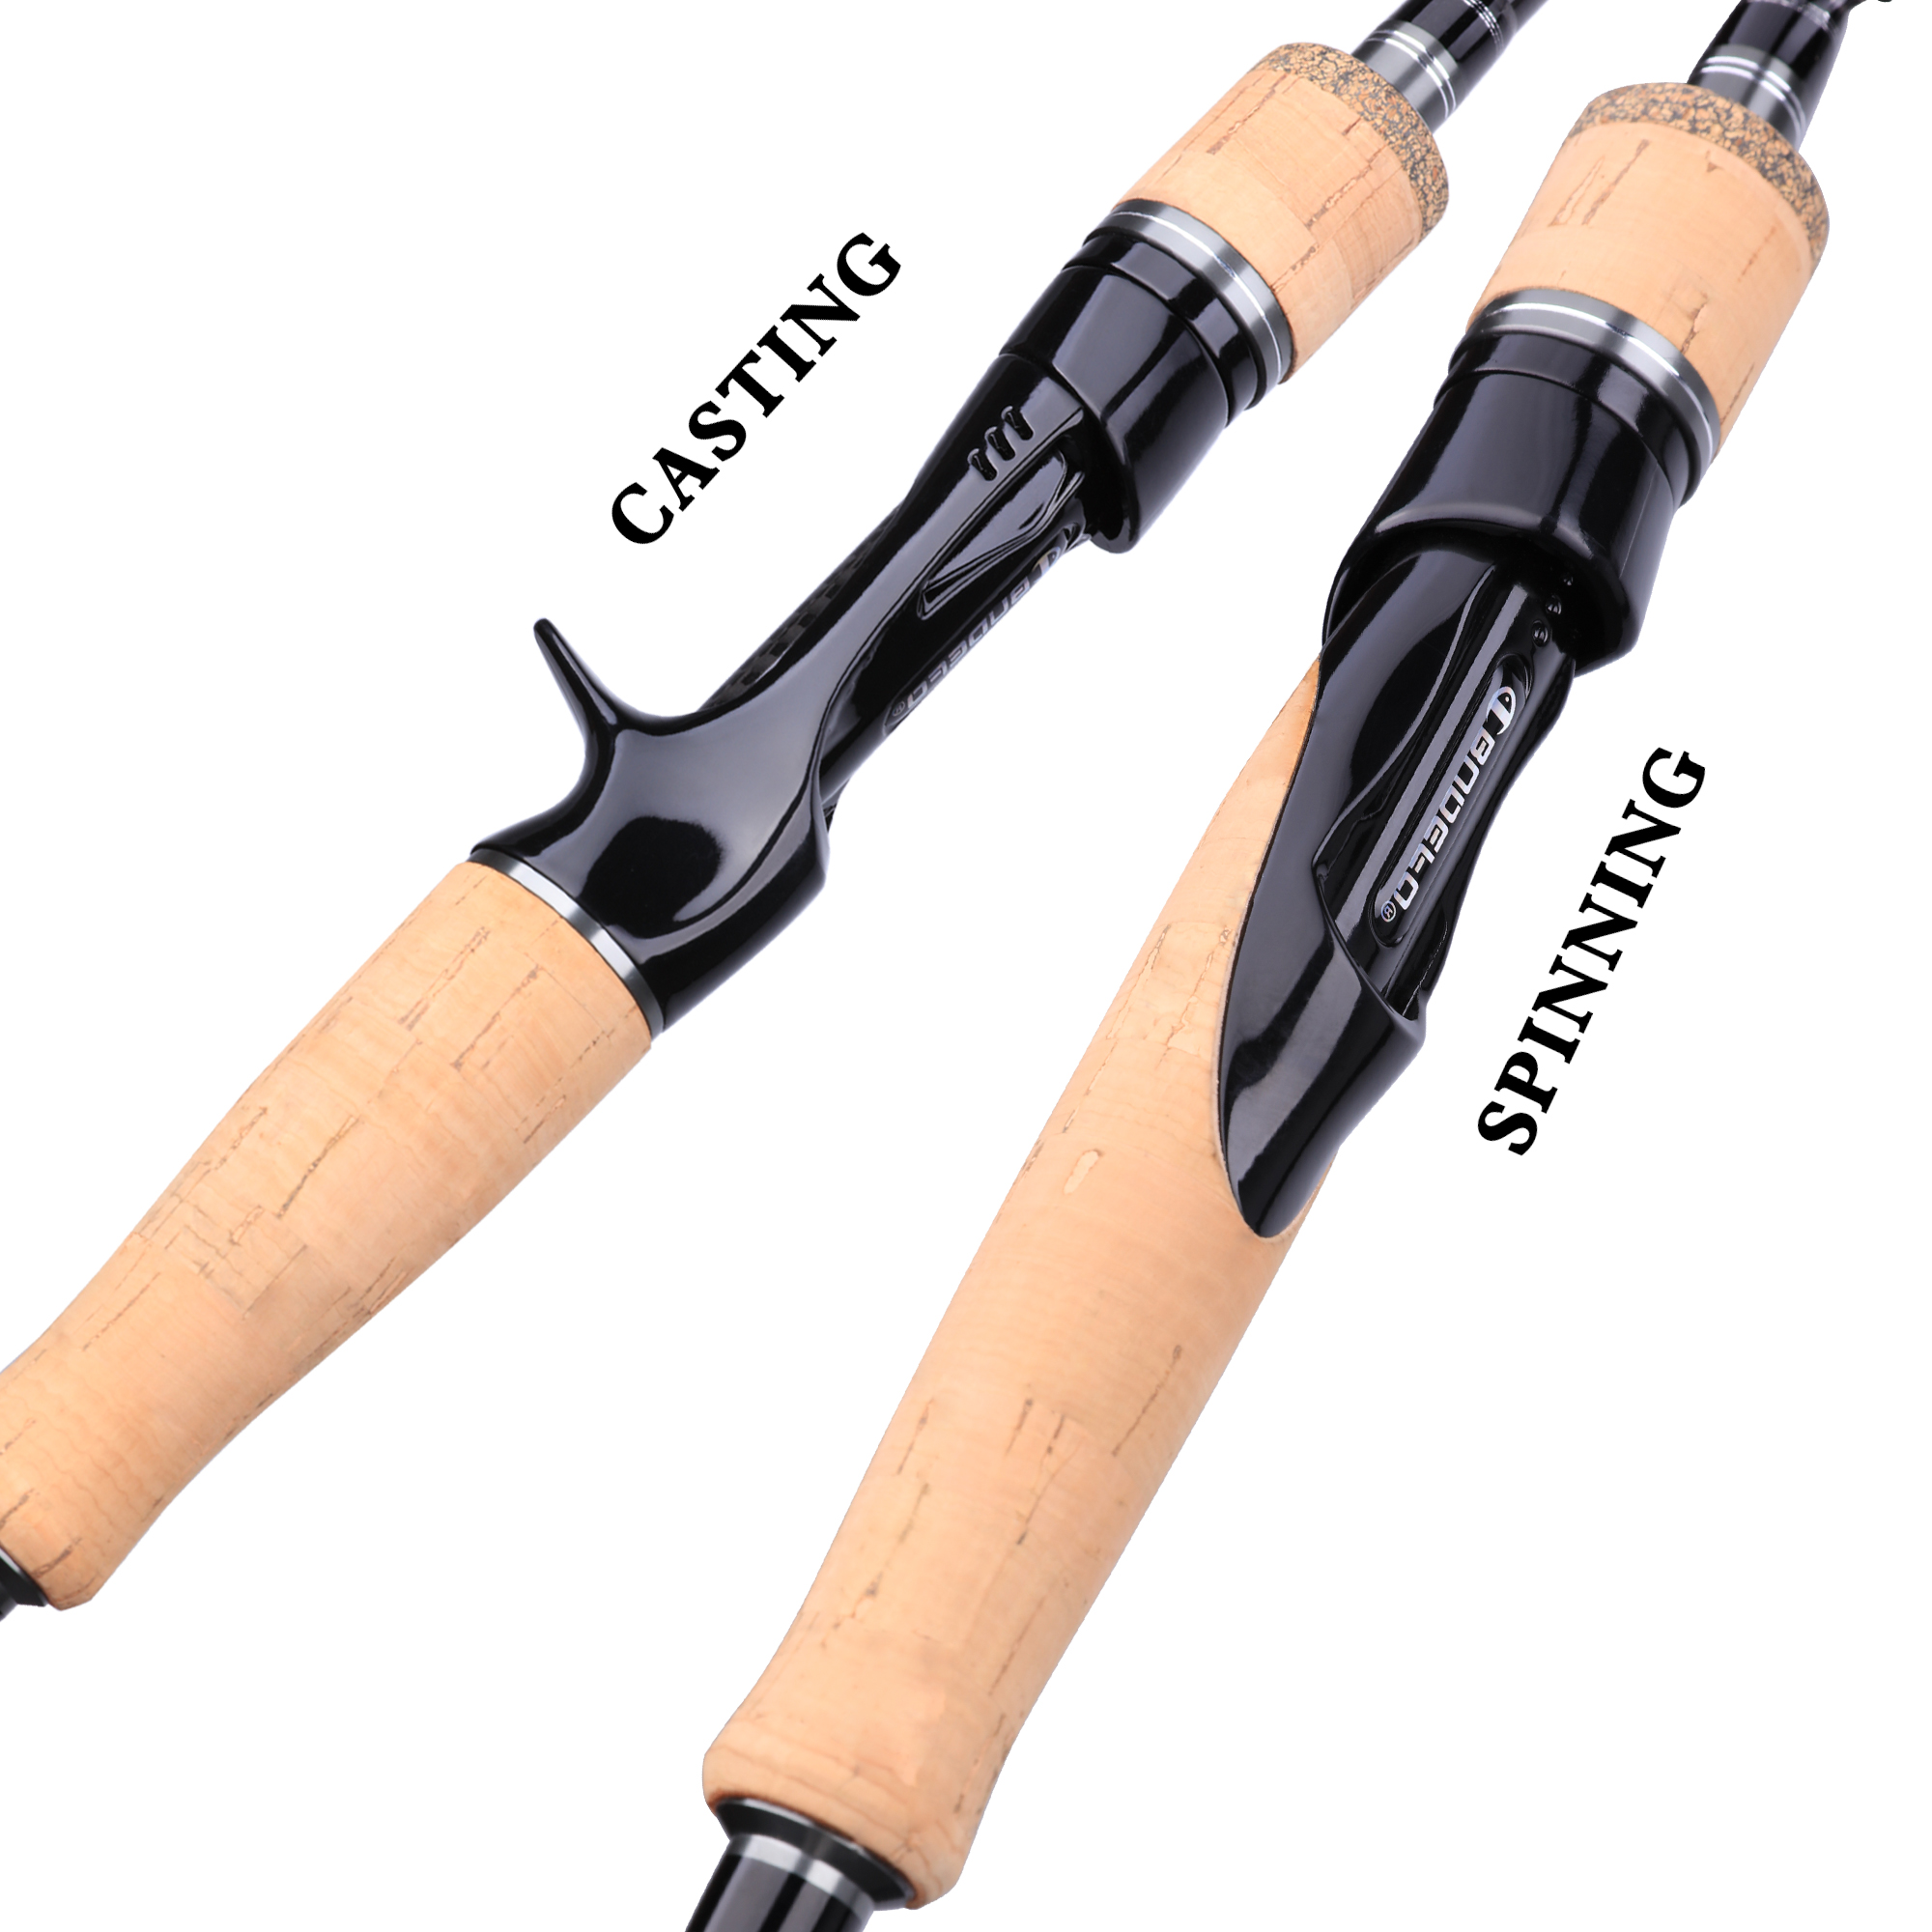 BUDEFO Spinning Casting Fuji Lure Fishing Rod 1.68m 1.8m 2.1m 2.4m 2.7m  3.0m Baitcasting T800 Carbon 3-50g Mifine Travel Rod